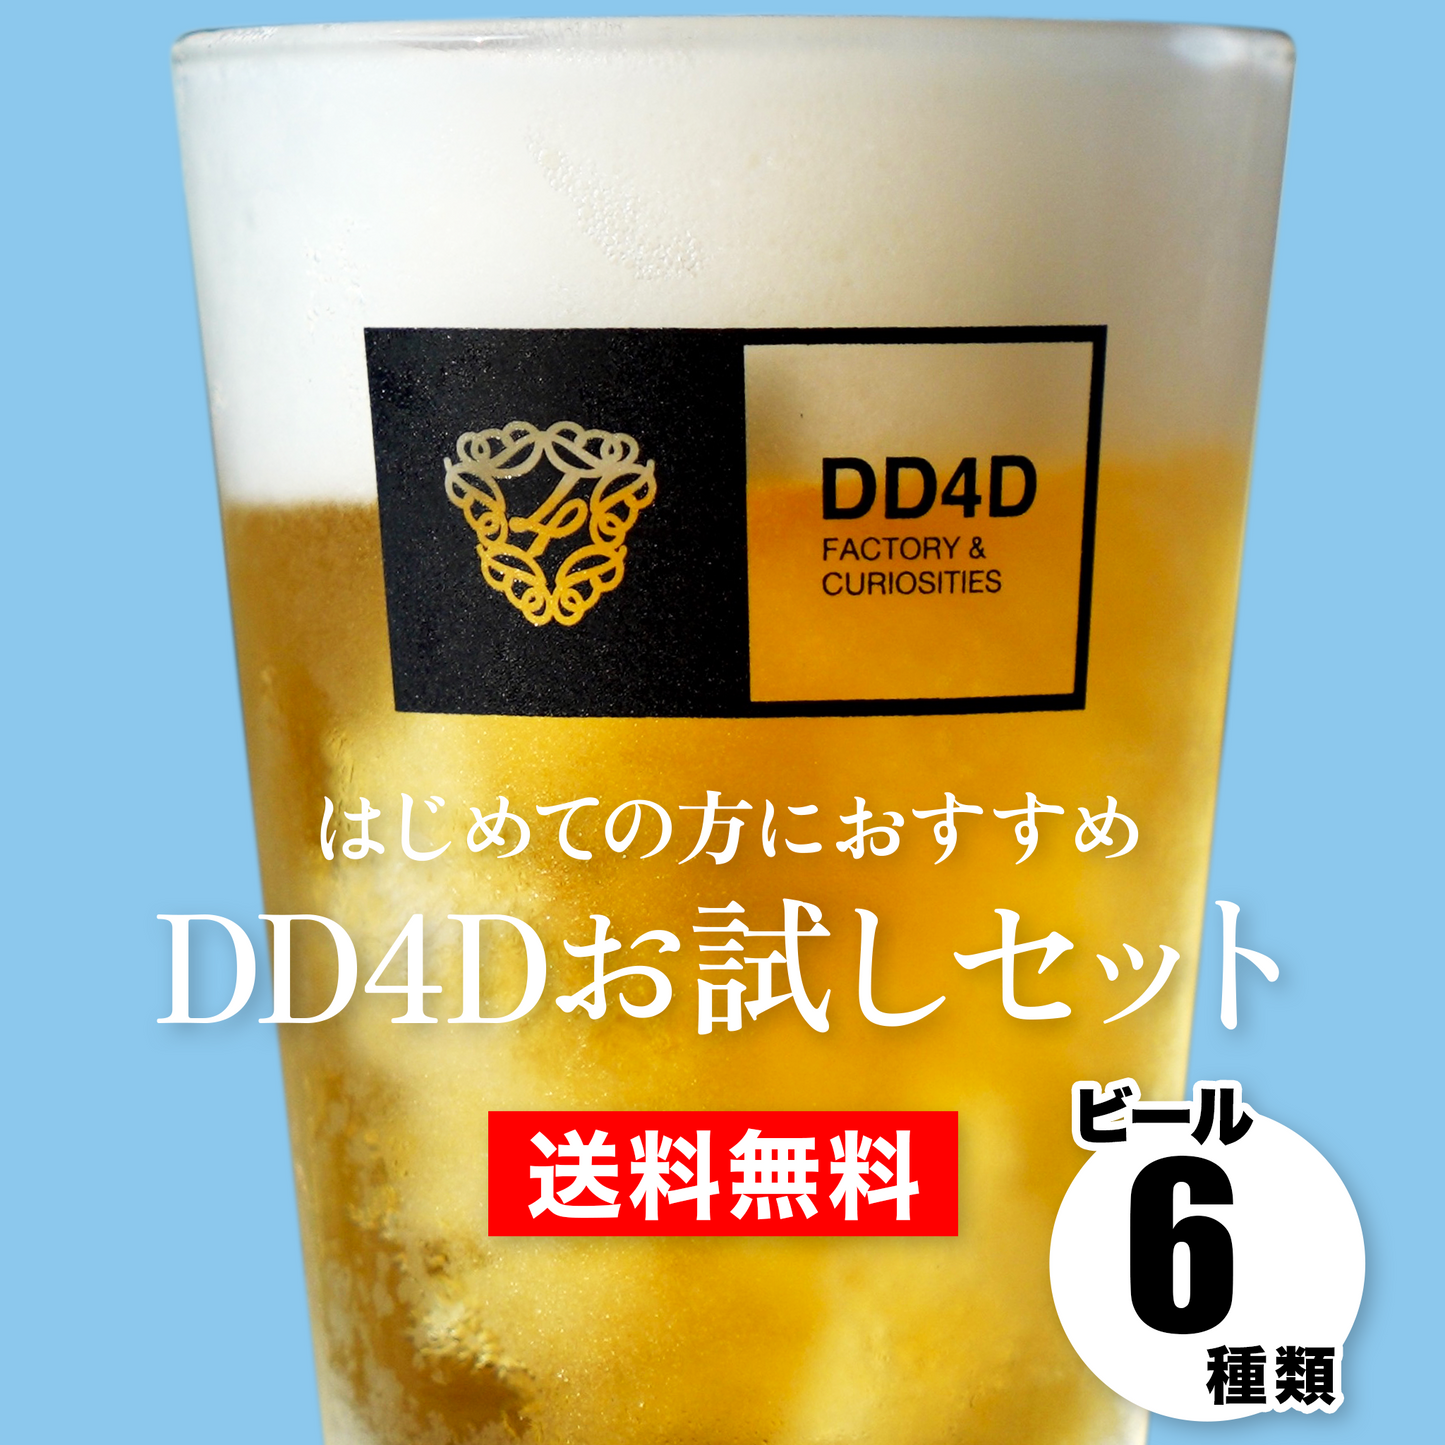 DD4Dお試しセット6本入り (送料無料) 2月26日リニューアル